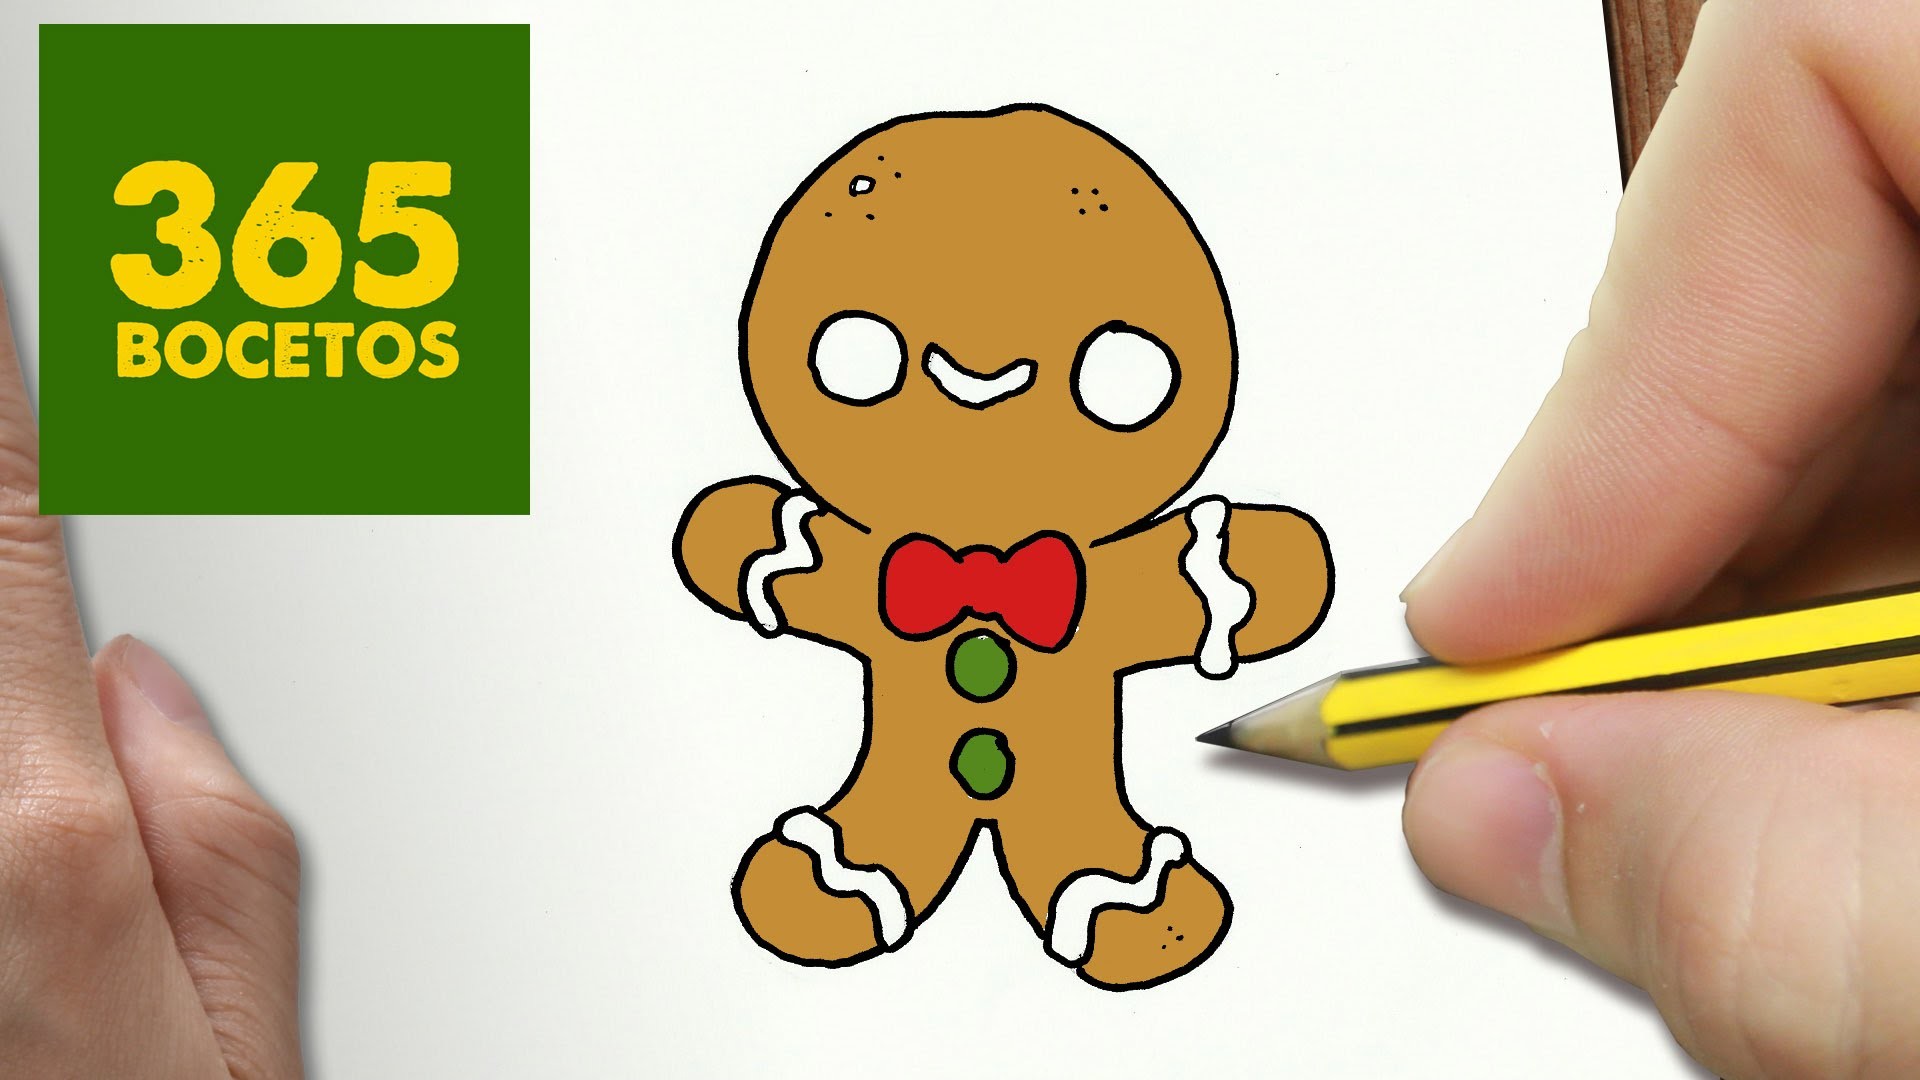 COMO DIBUJAR GALLETA PARA NAVIDAD PASO A PASO: Dibujos kawaii navideños - How to draw a cookie